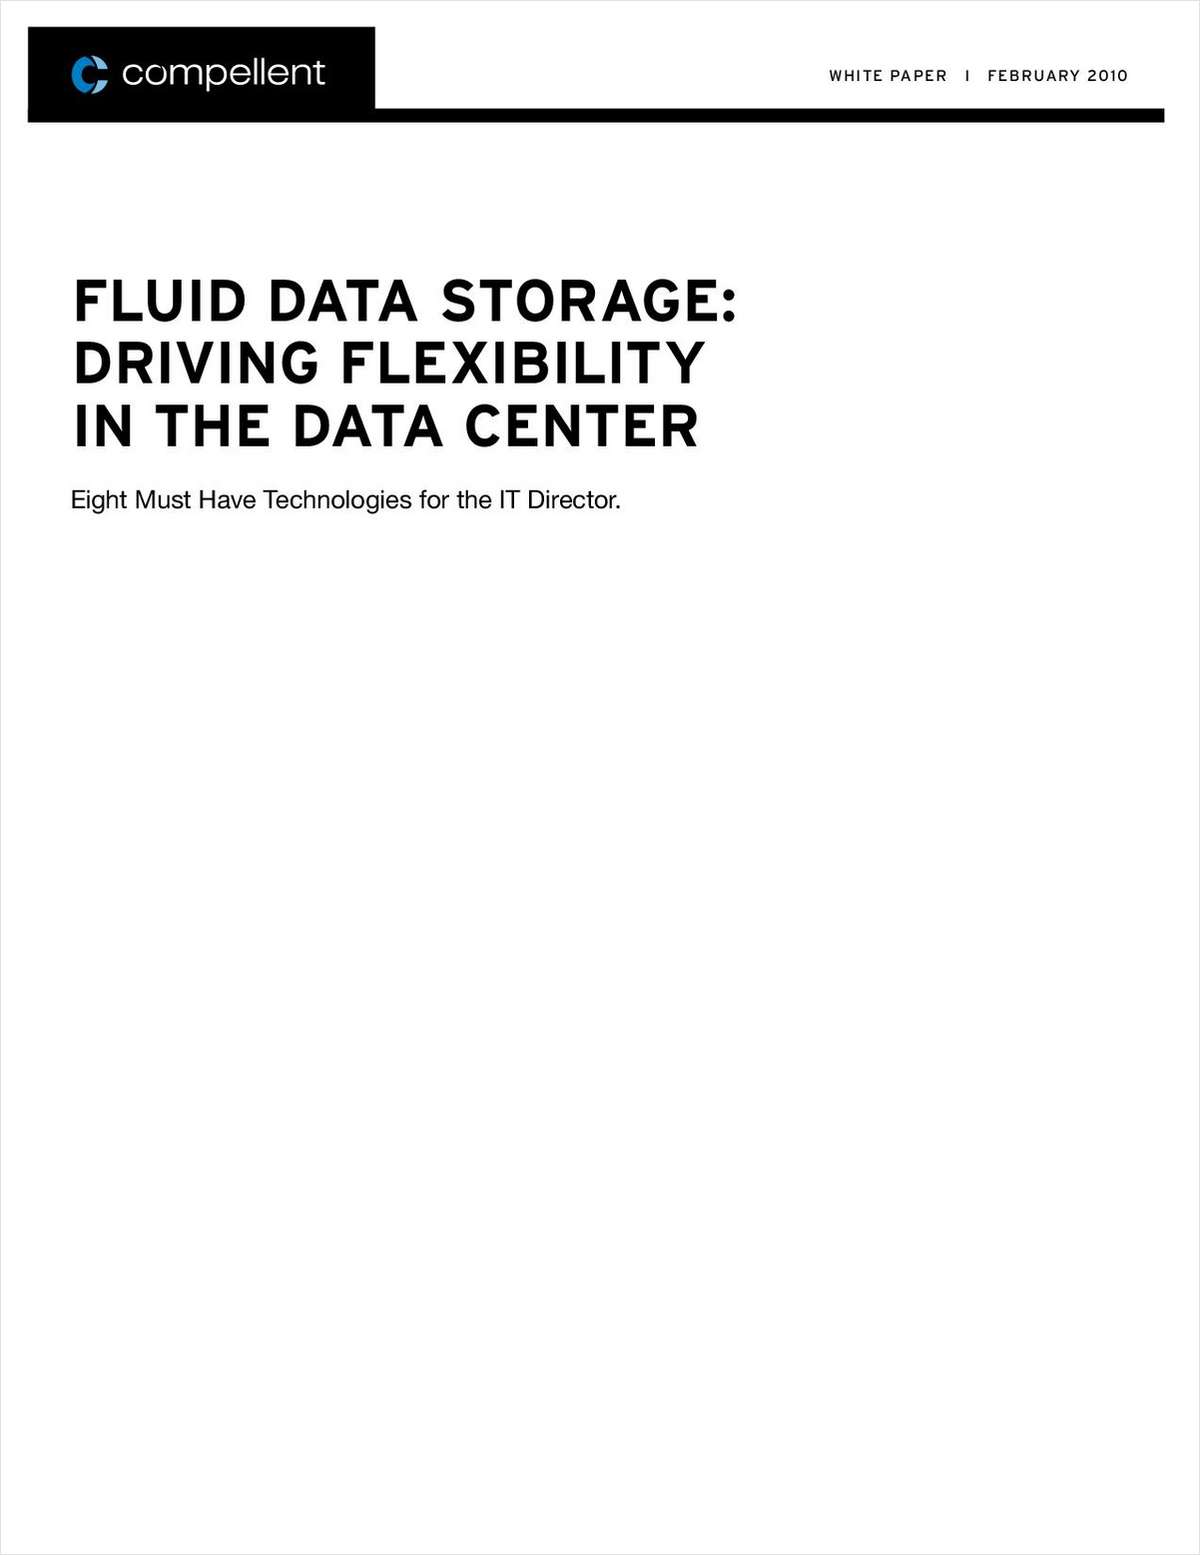 Fluid Data Storage Drives Flexibility in the Data Center